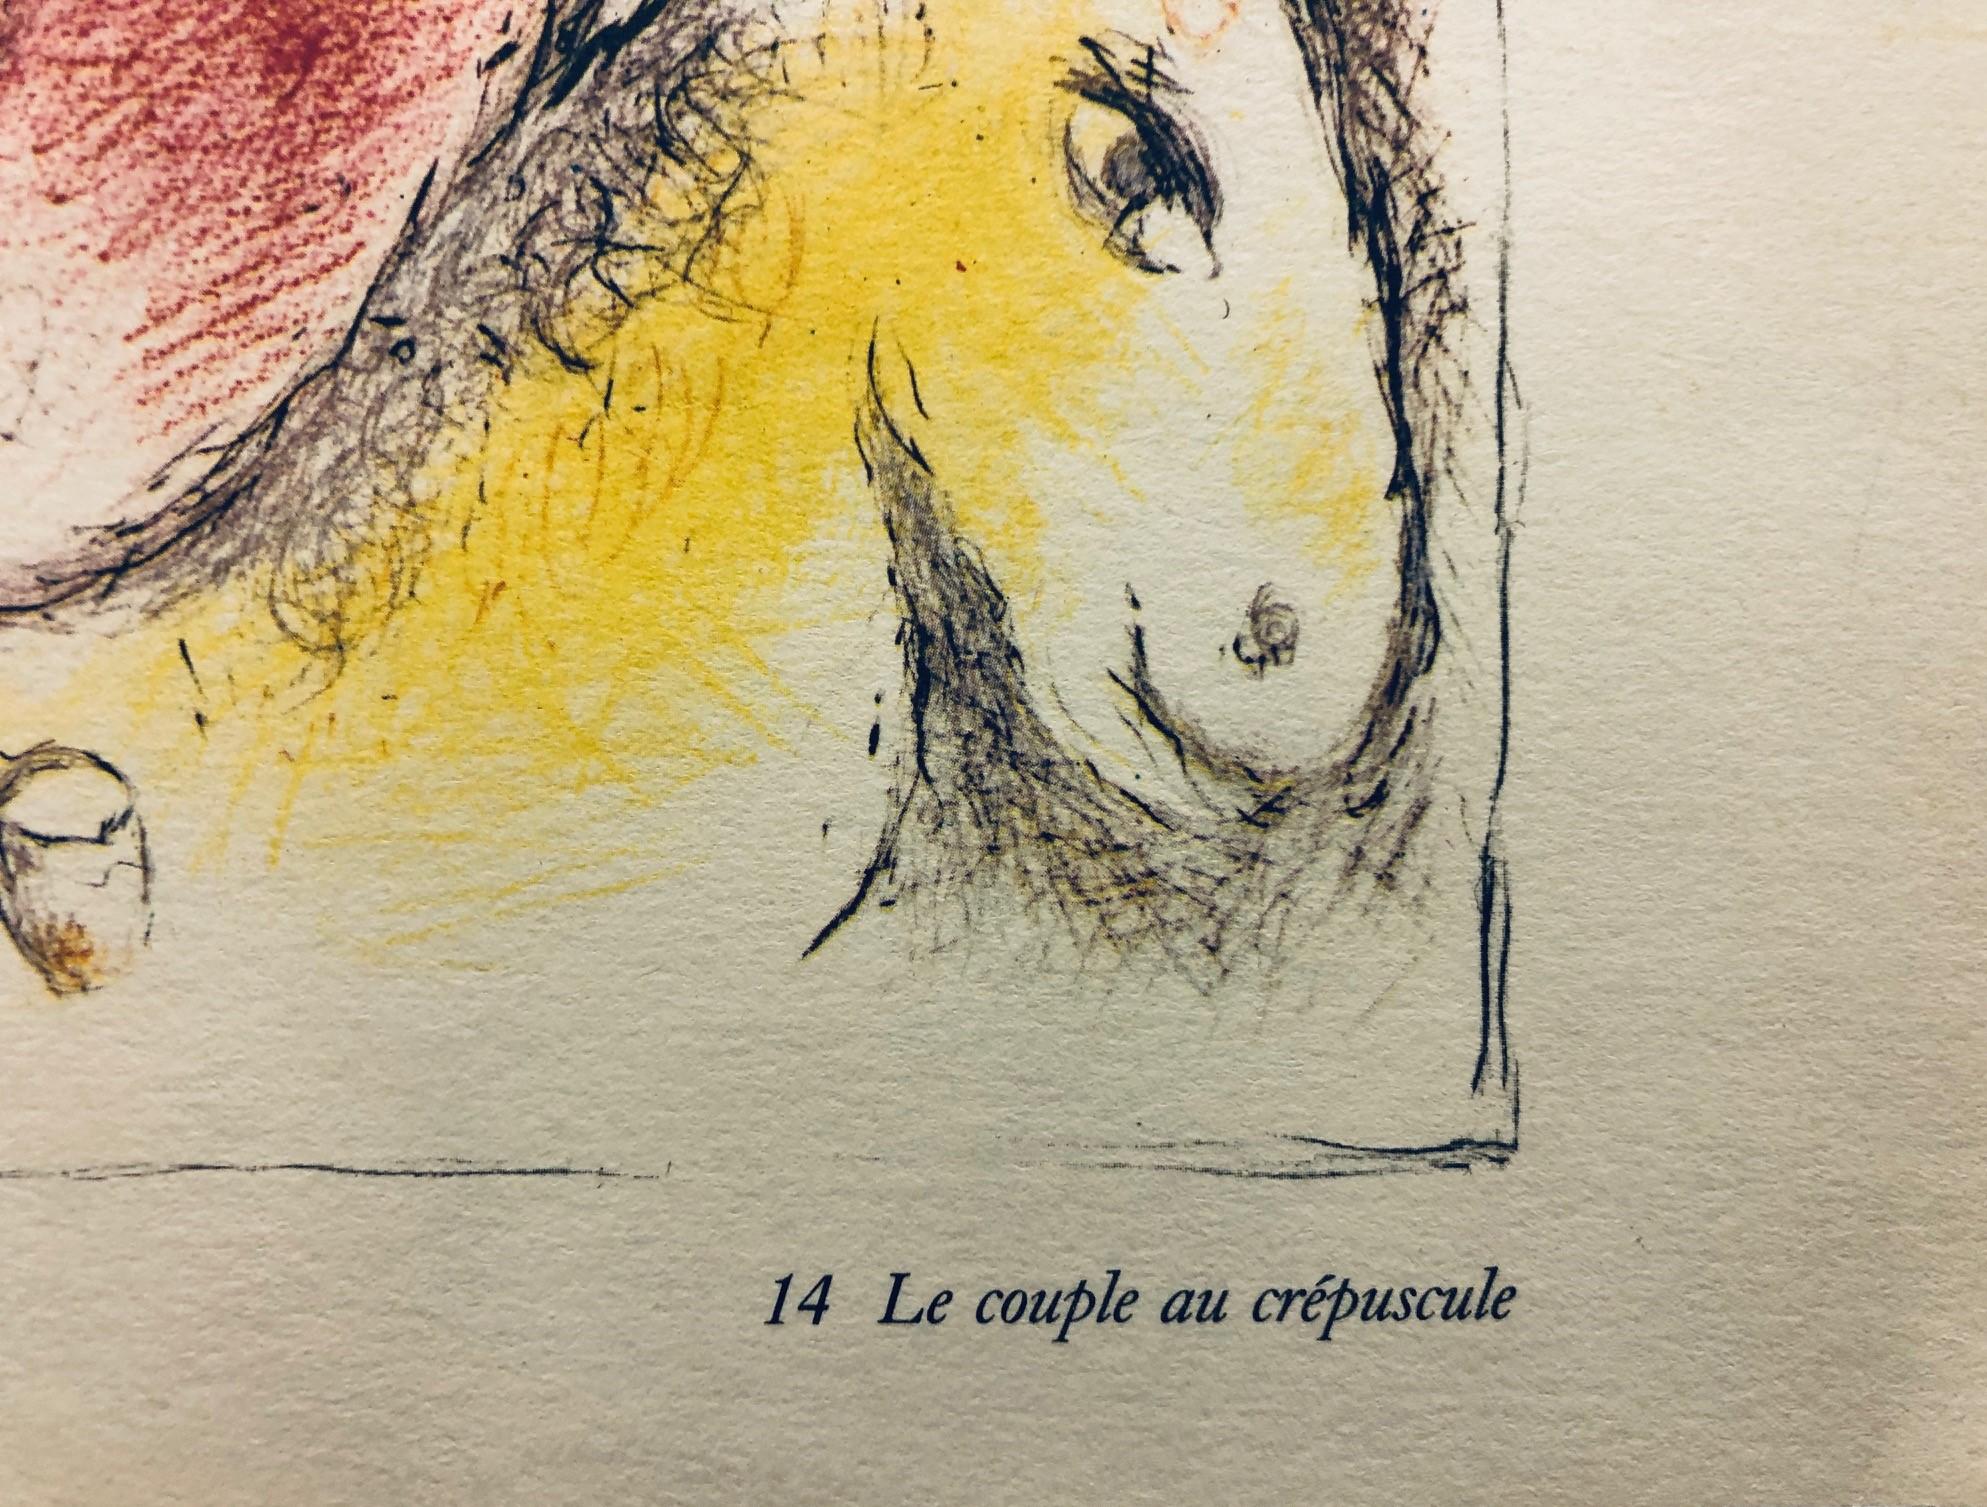 Le Couple Au Crepuscule-Lithograph from Derriere Le Miroir - Print by Marc Chagall